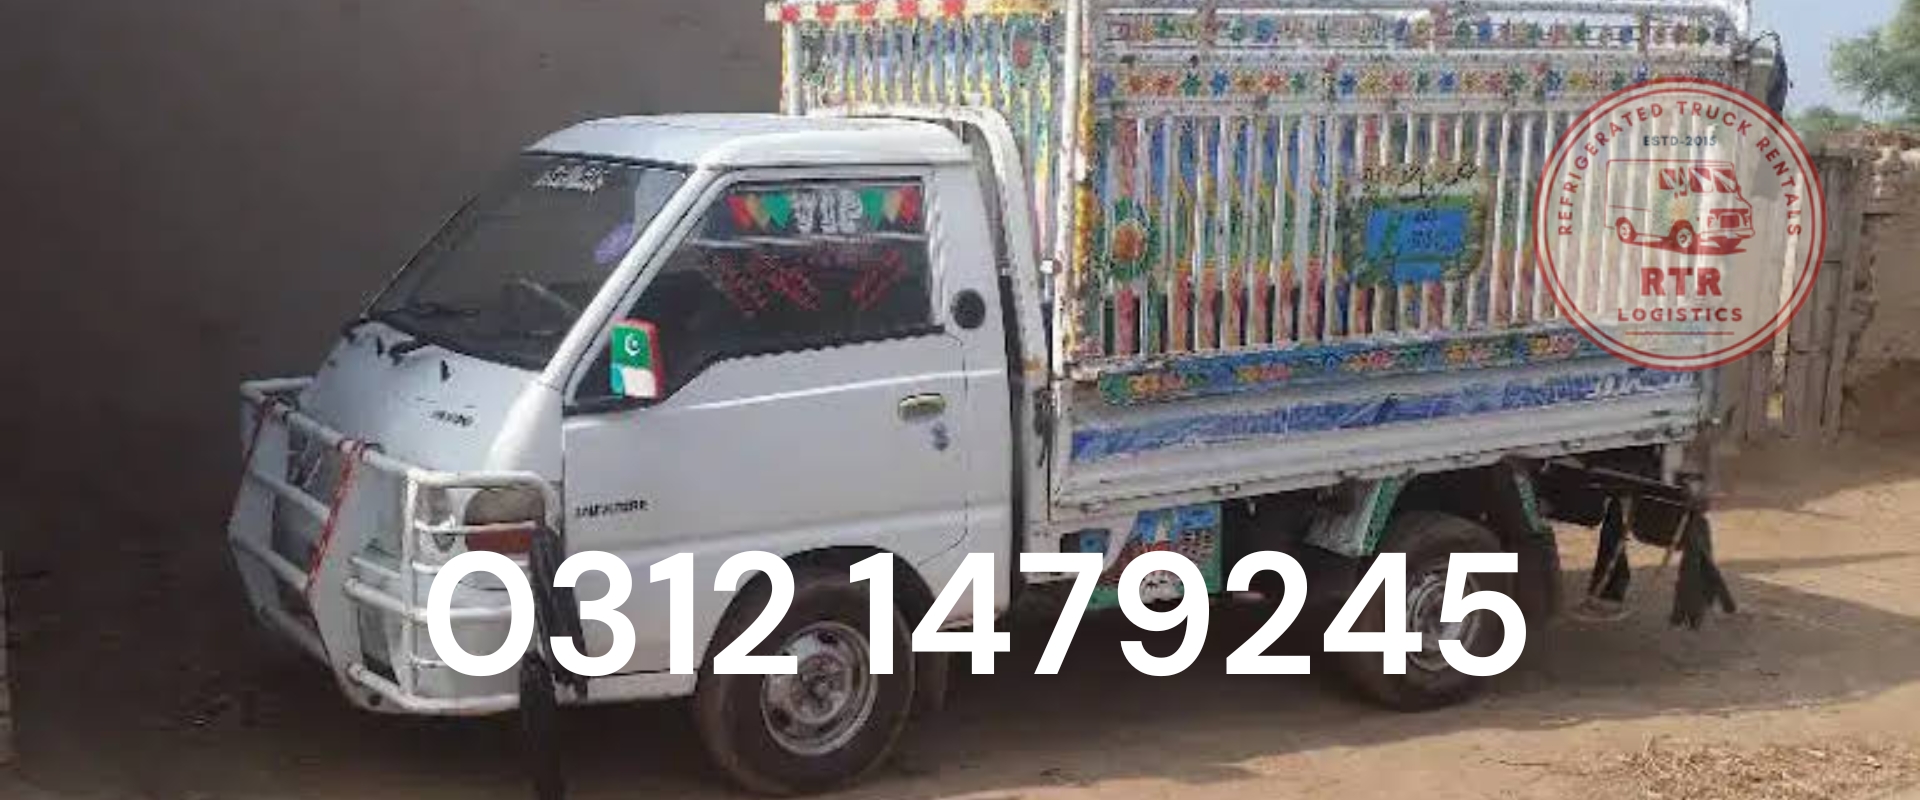 Mini Truck Transport Services in Islamabad Pakistan